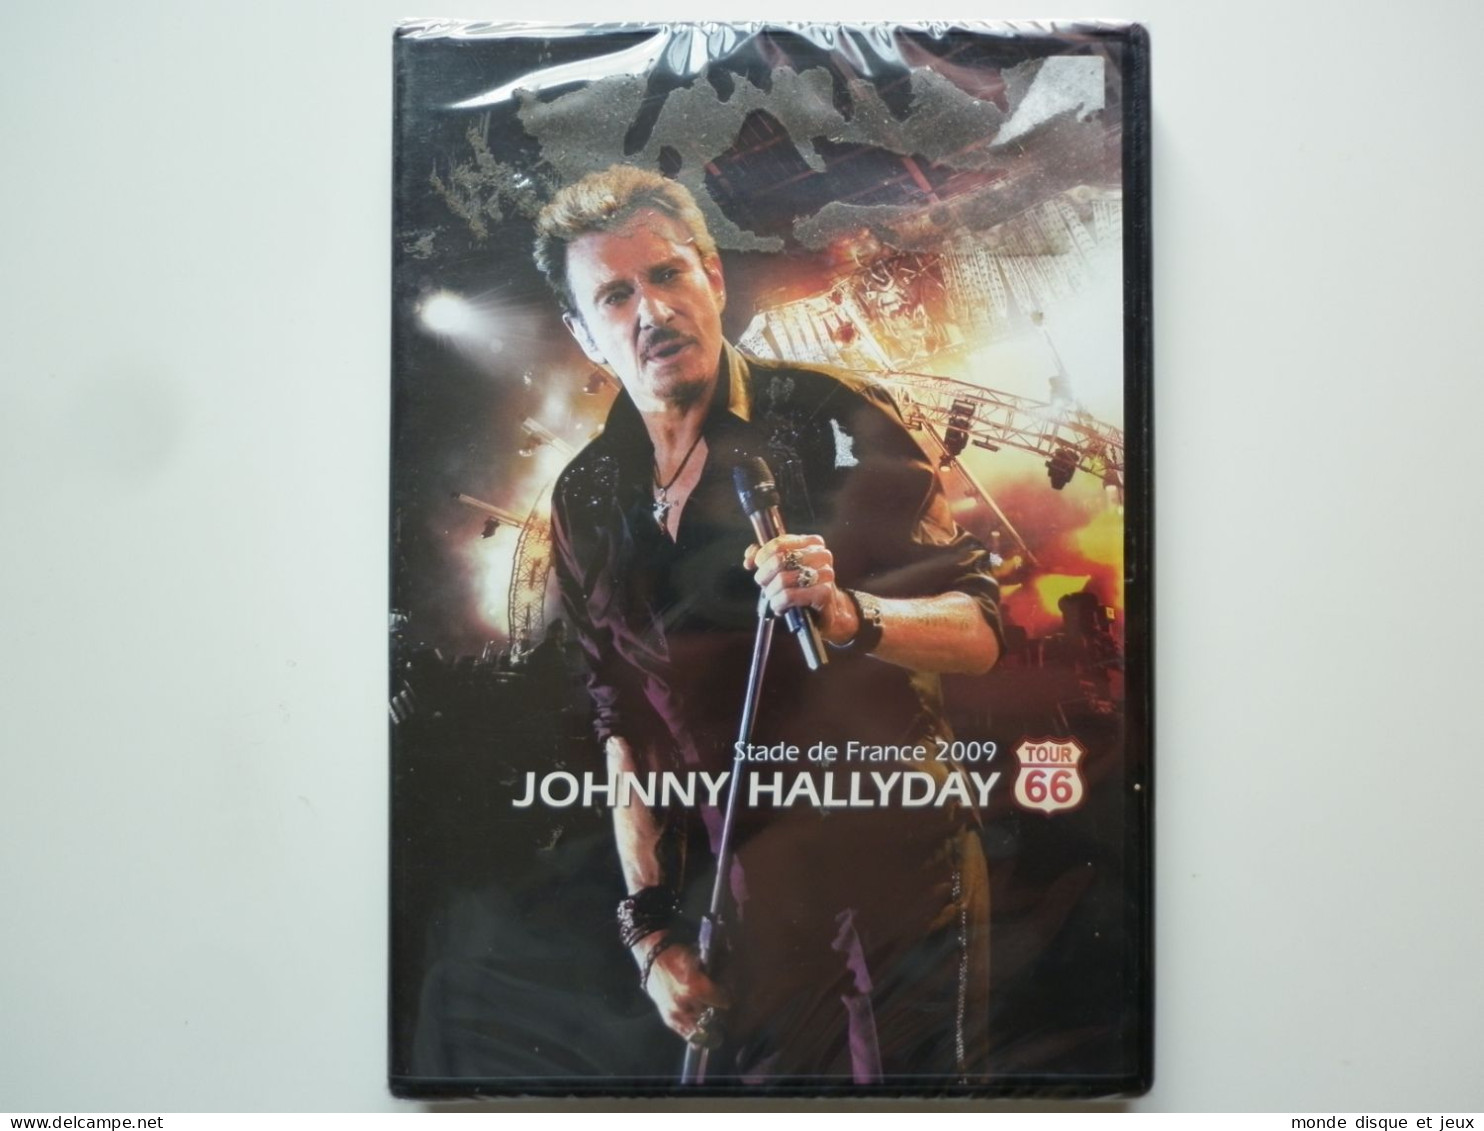 Johnny Hallyday Dvd Stade De France 2009 Tour 66 - DVD Musicaux